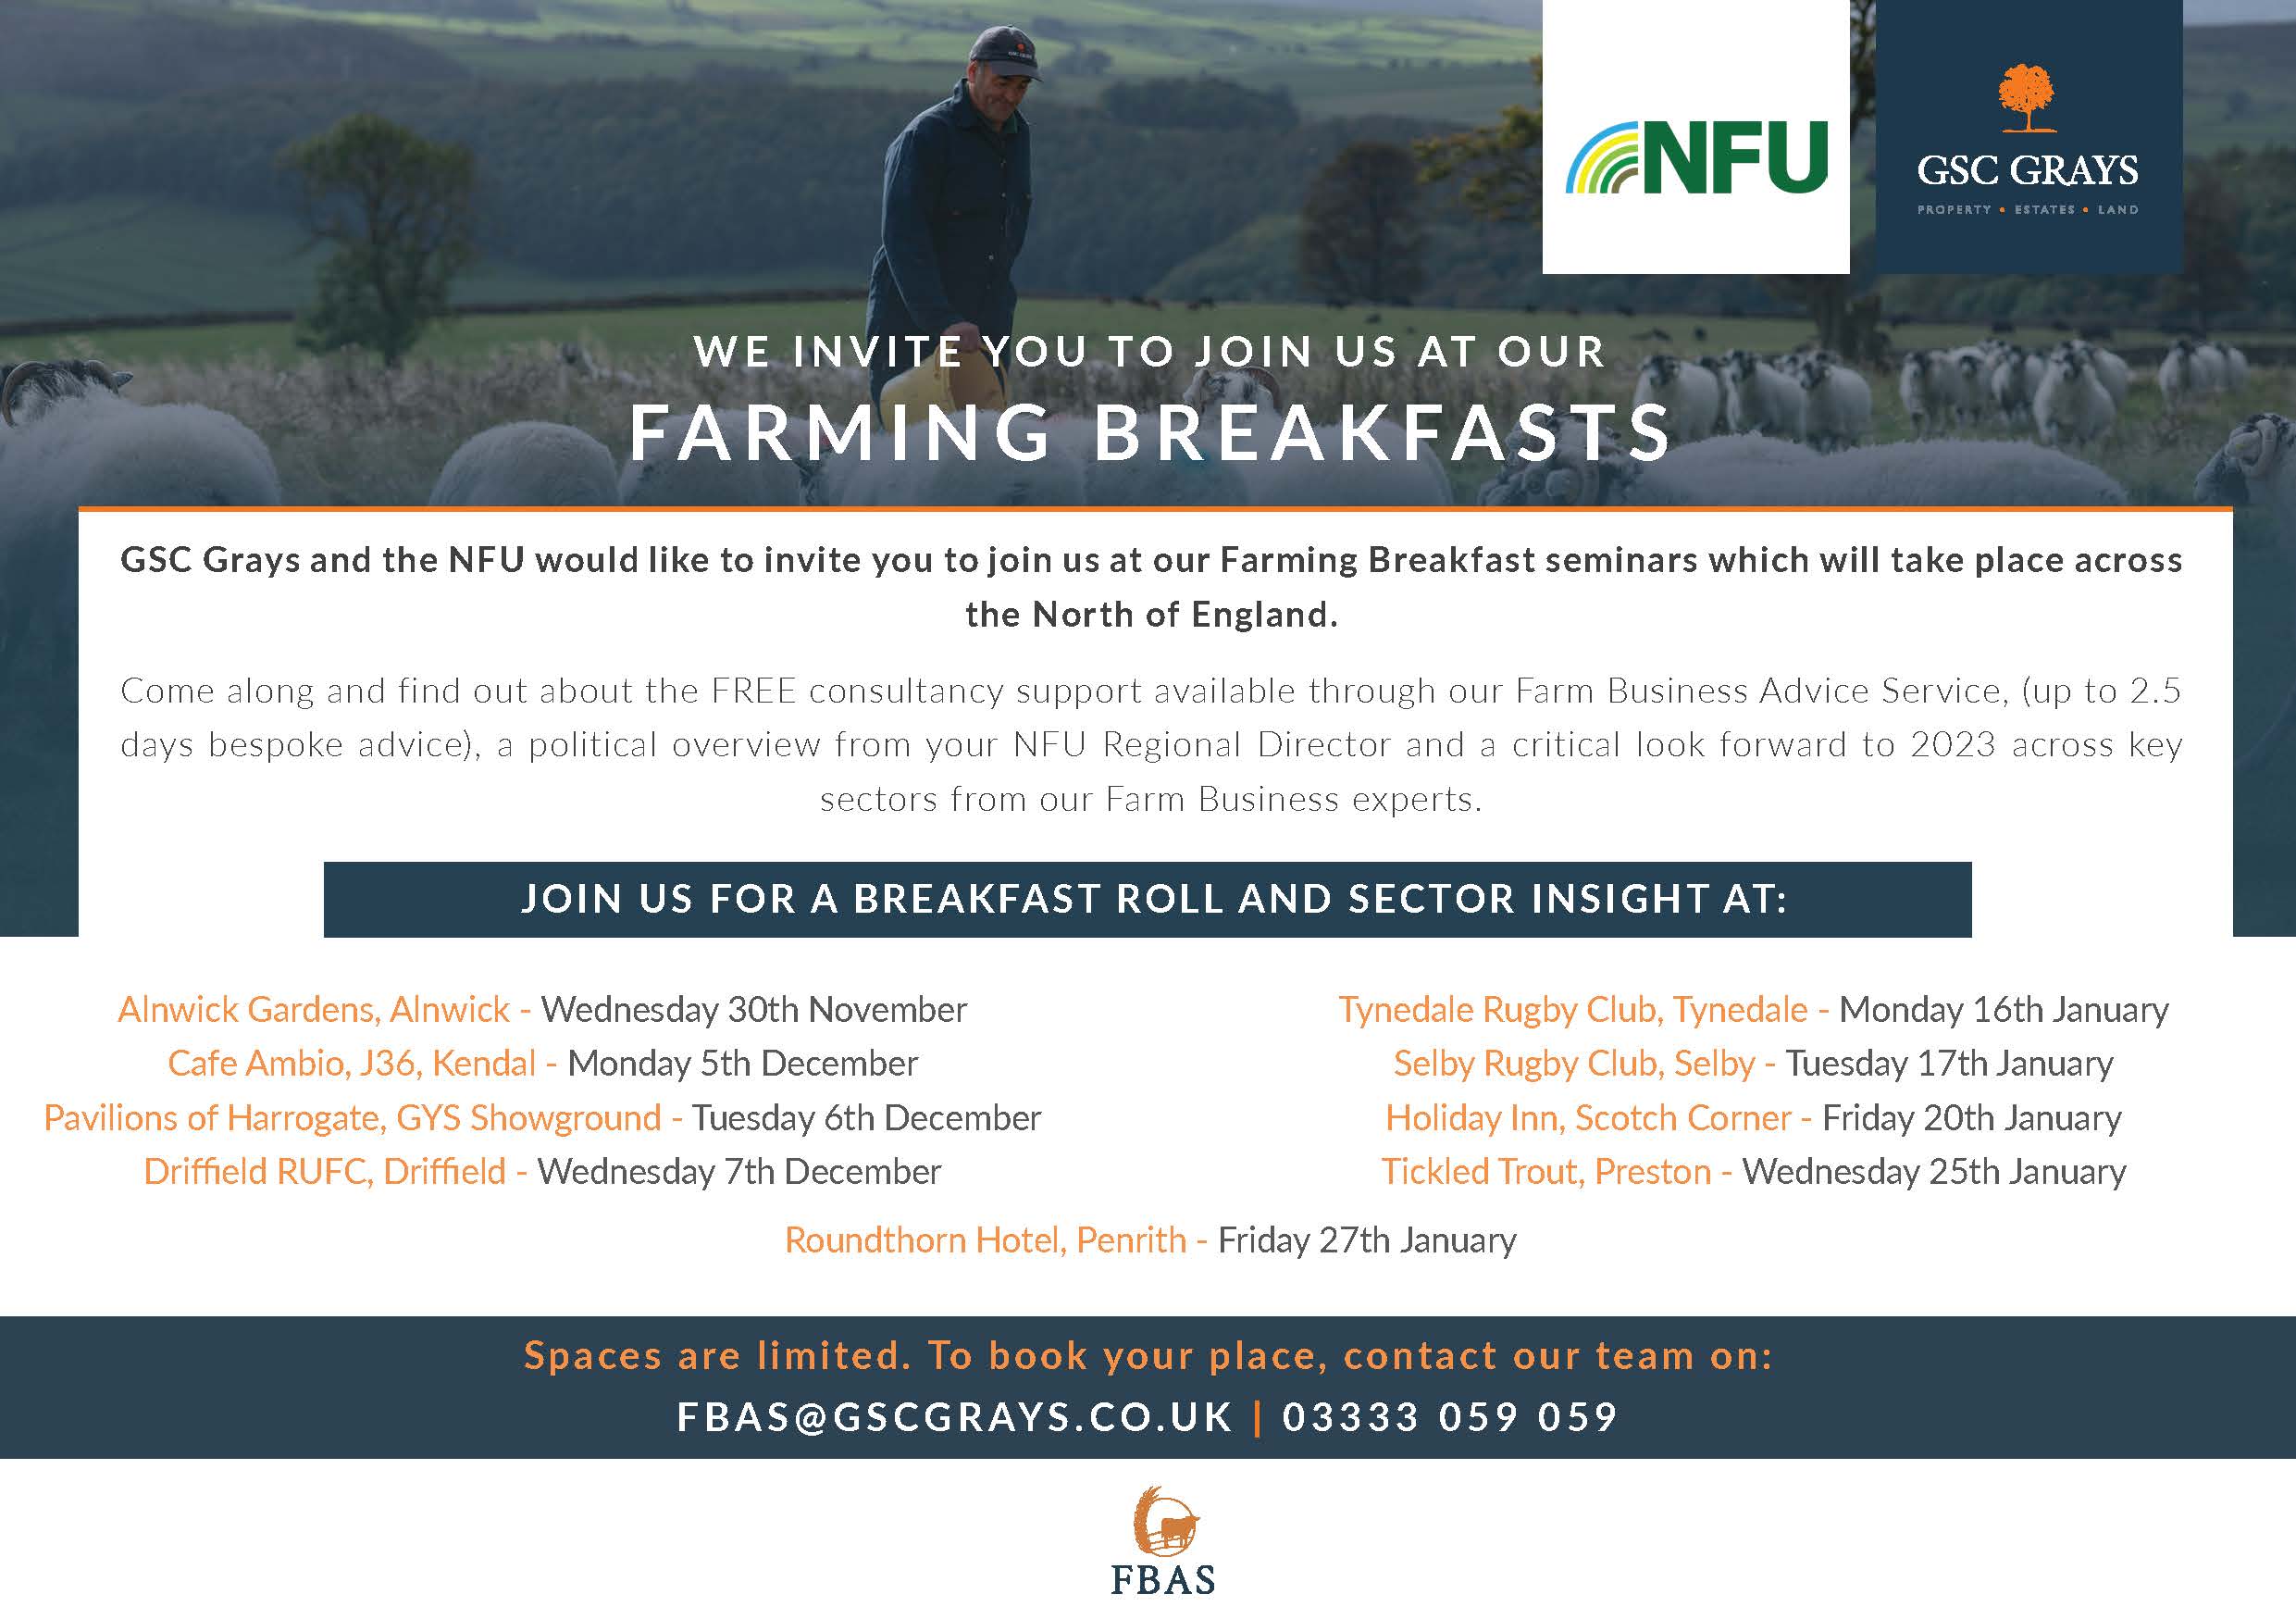 NFU-GSC Grays FFRF Farming Breakfasts